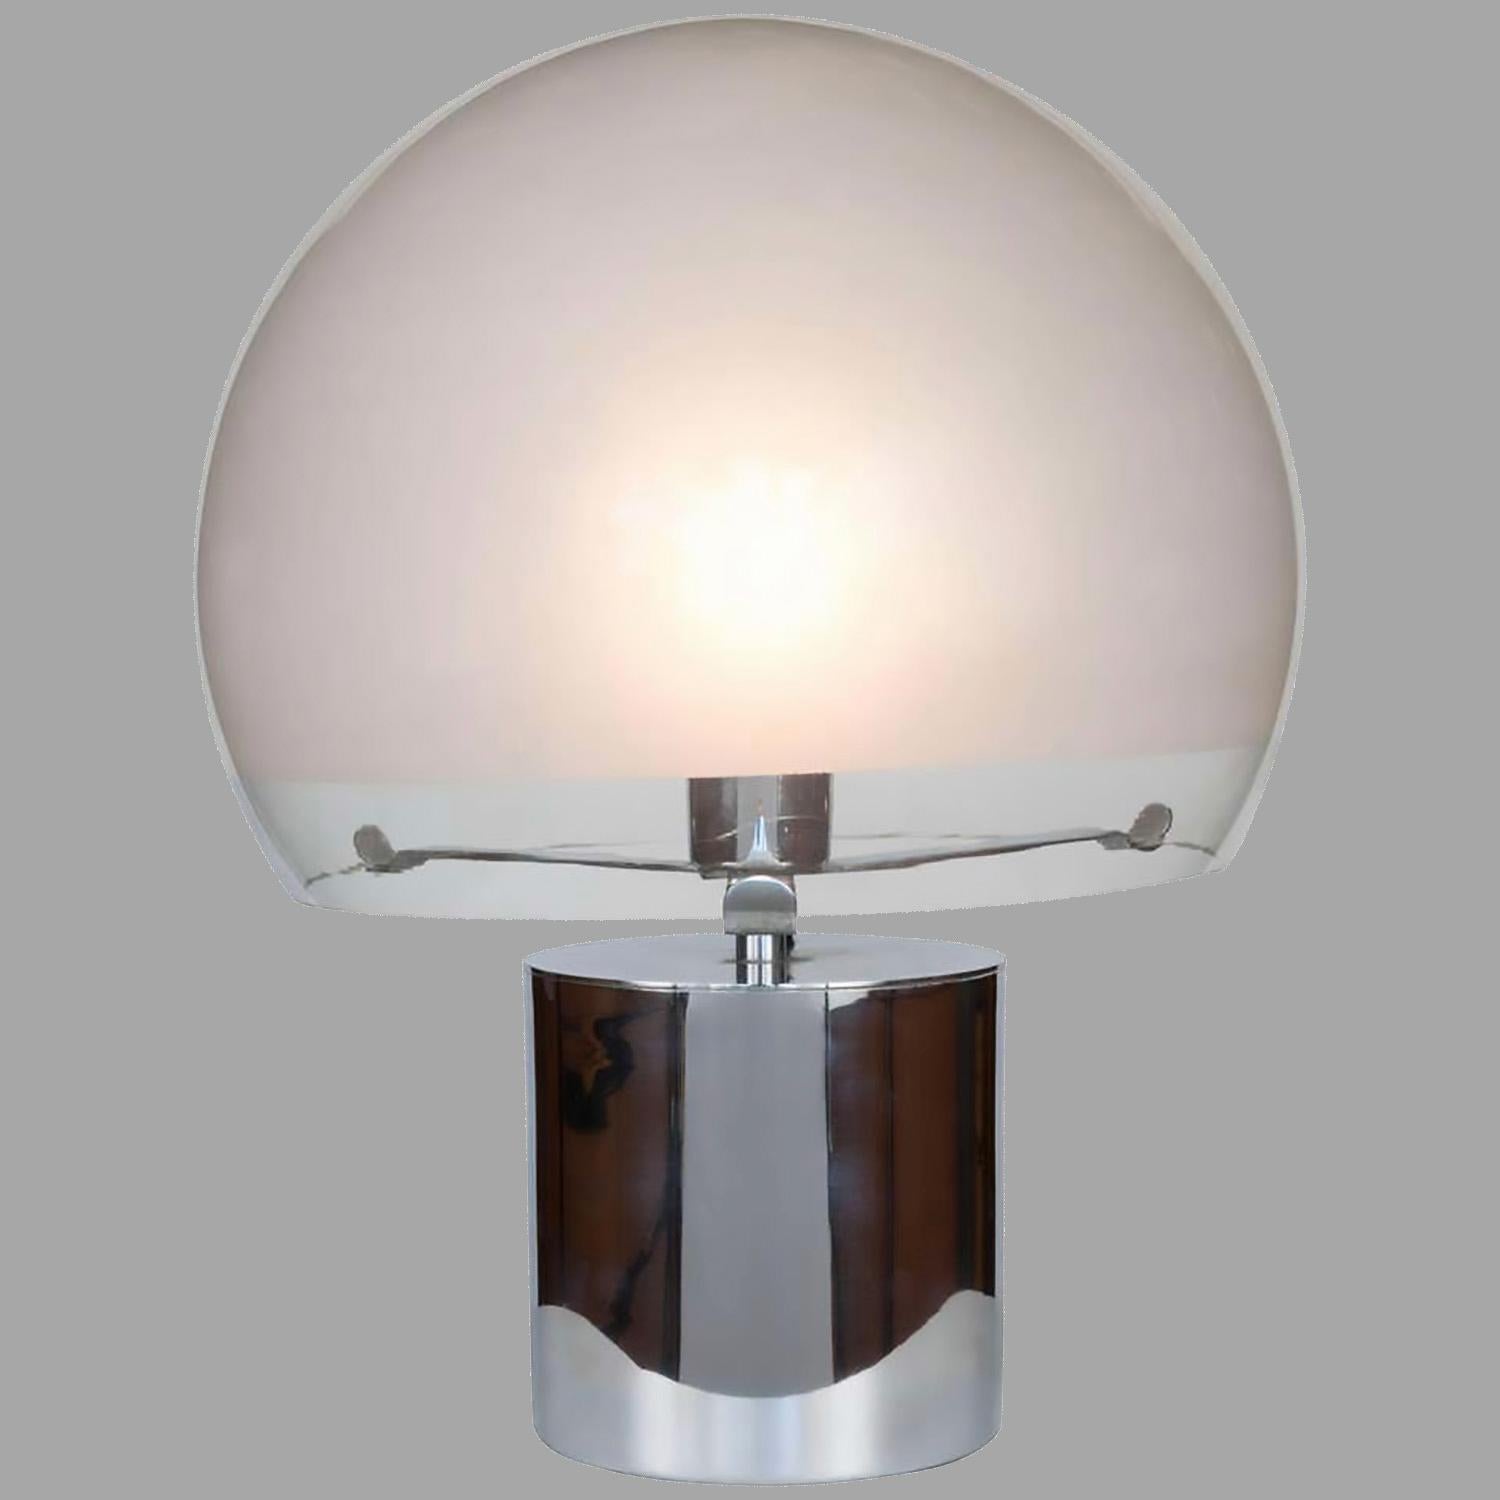 Mid-Century Modern Luigi Caccia Dominioni for Azucena ‘Porcino’ Table Lamp, Italy 1960s For Sale